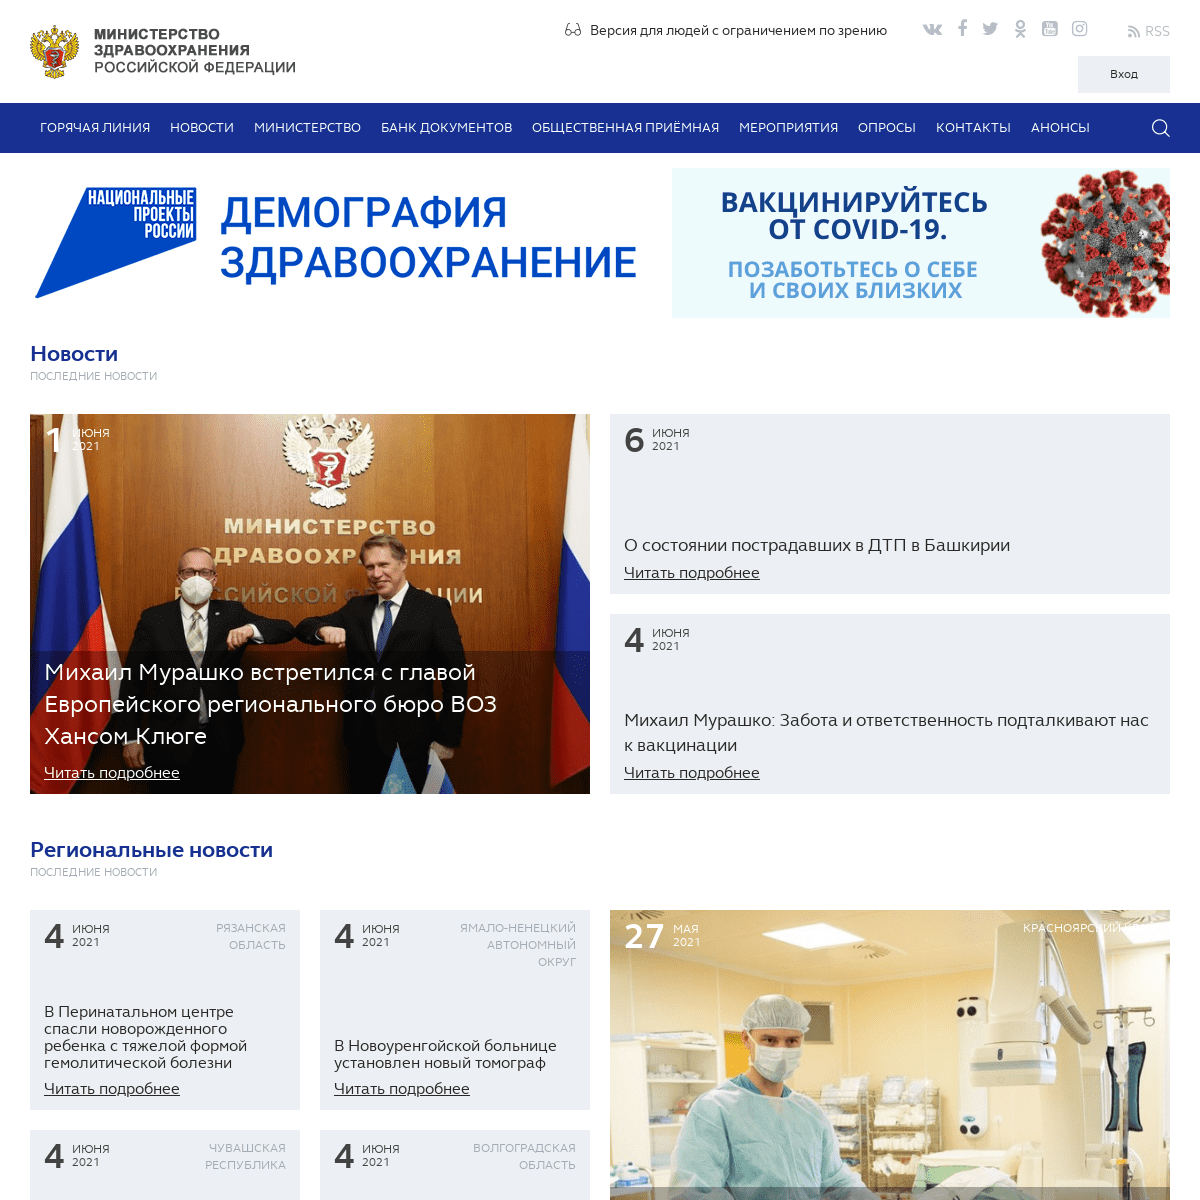 A complete backup of https://minzdrav.gov.ru